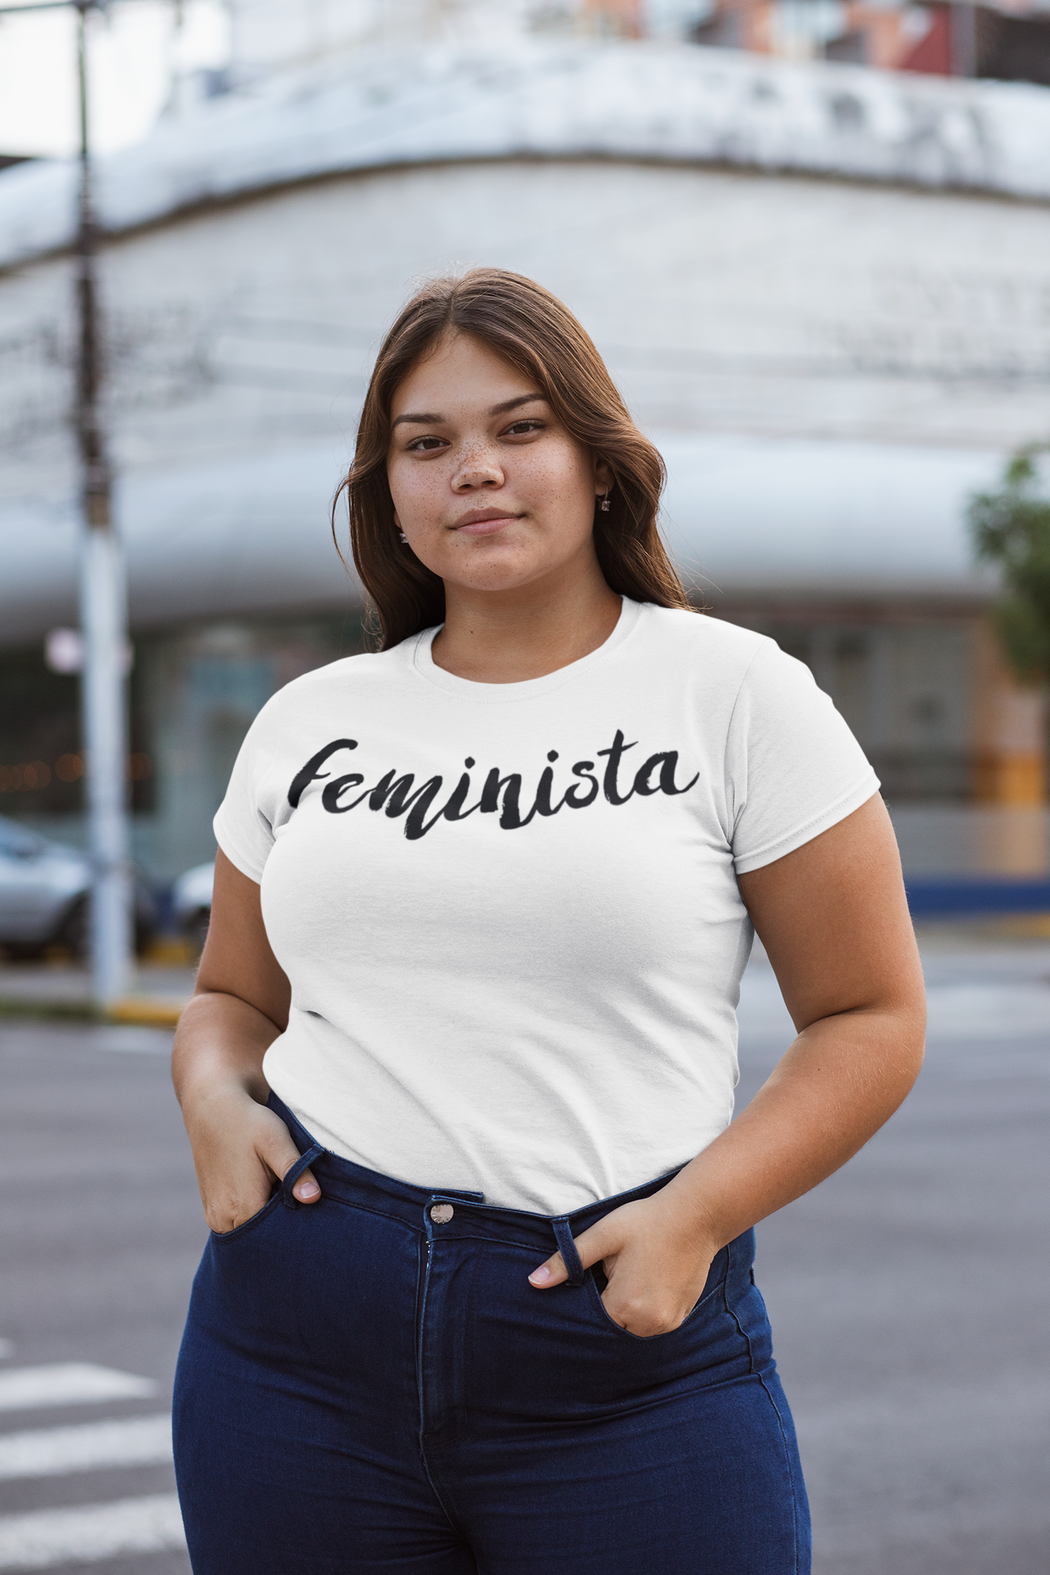 Feminista -- Women's T-Shirt